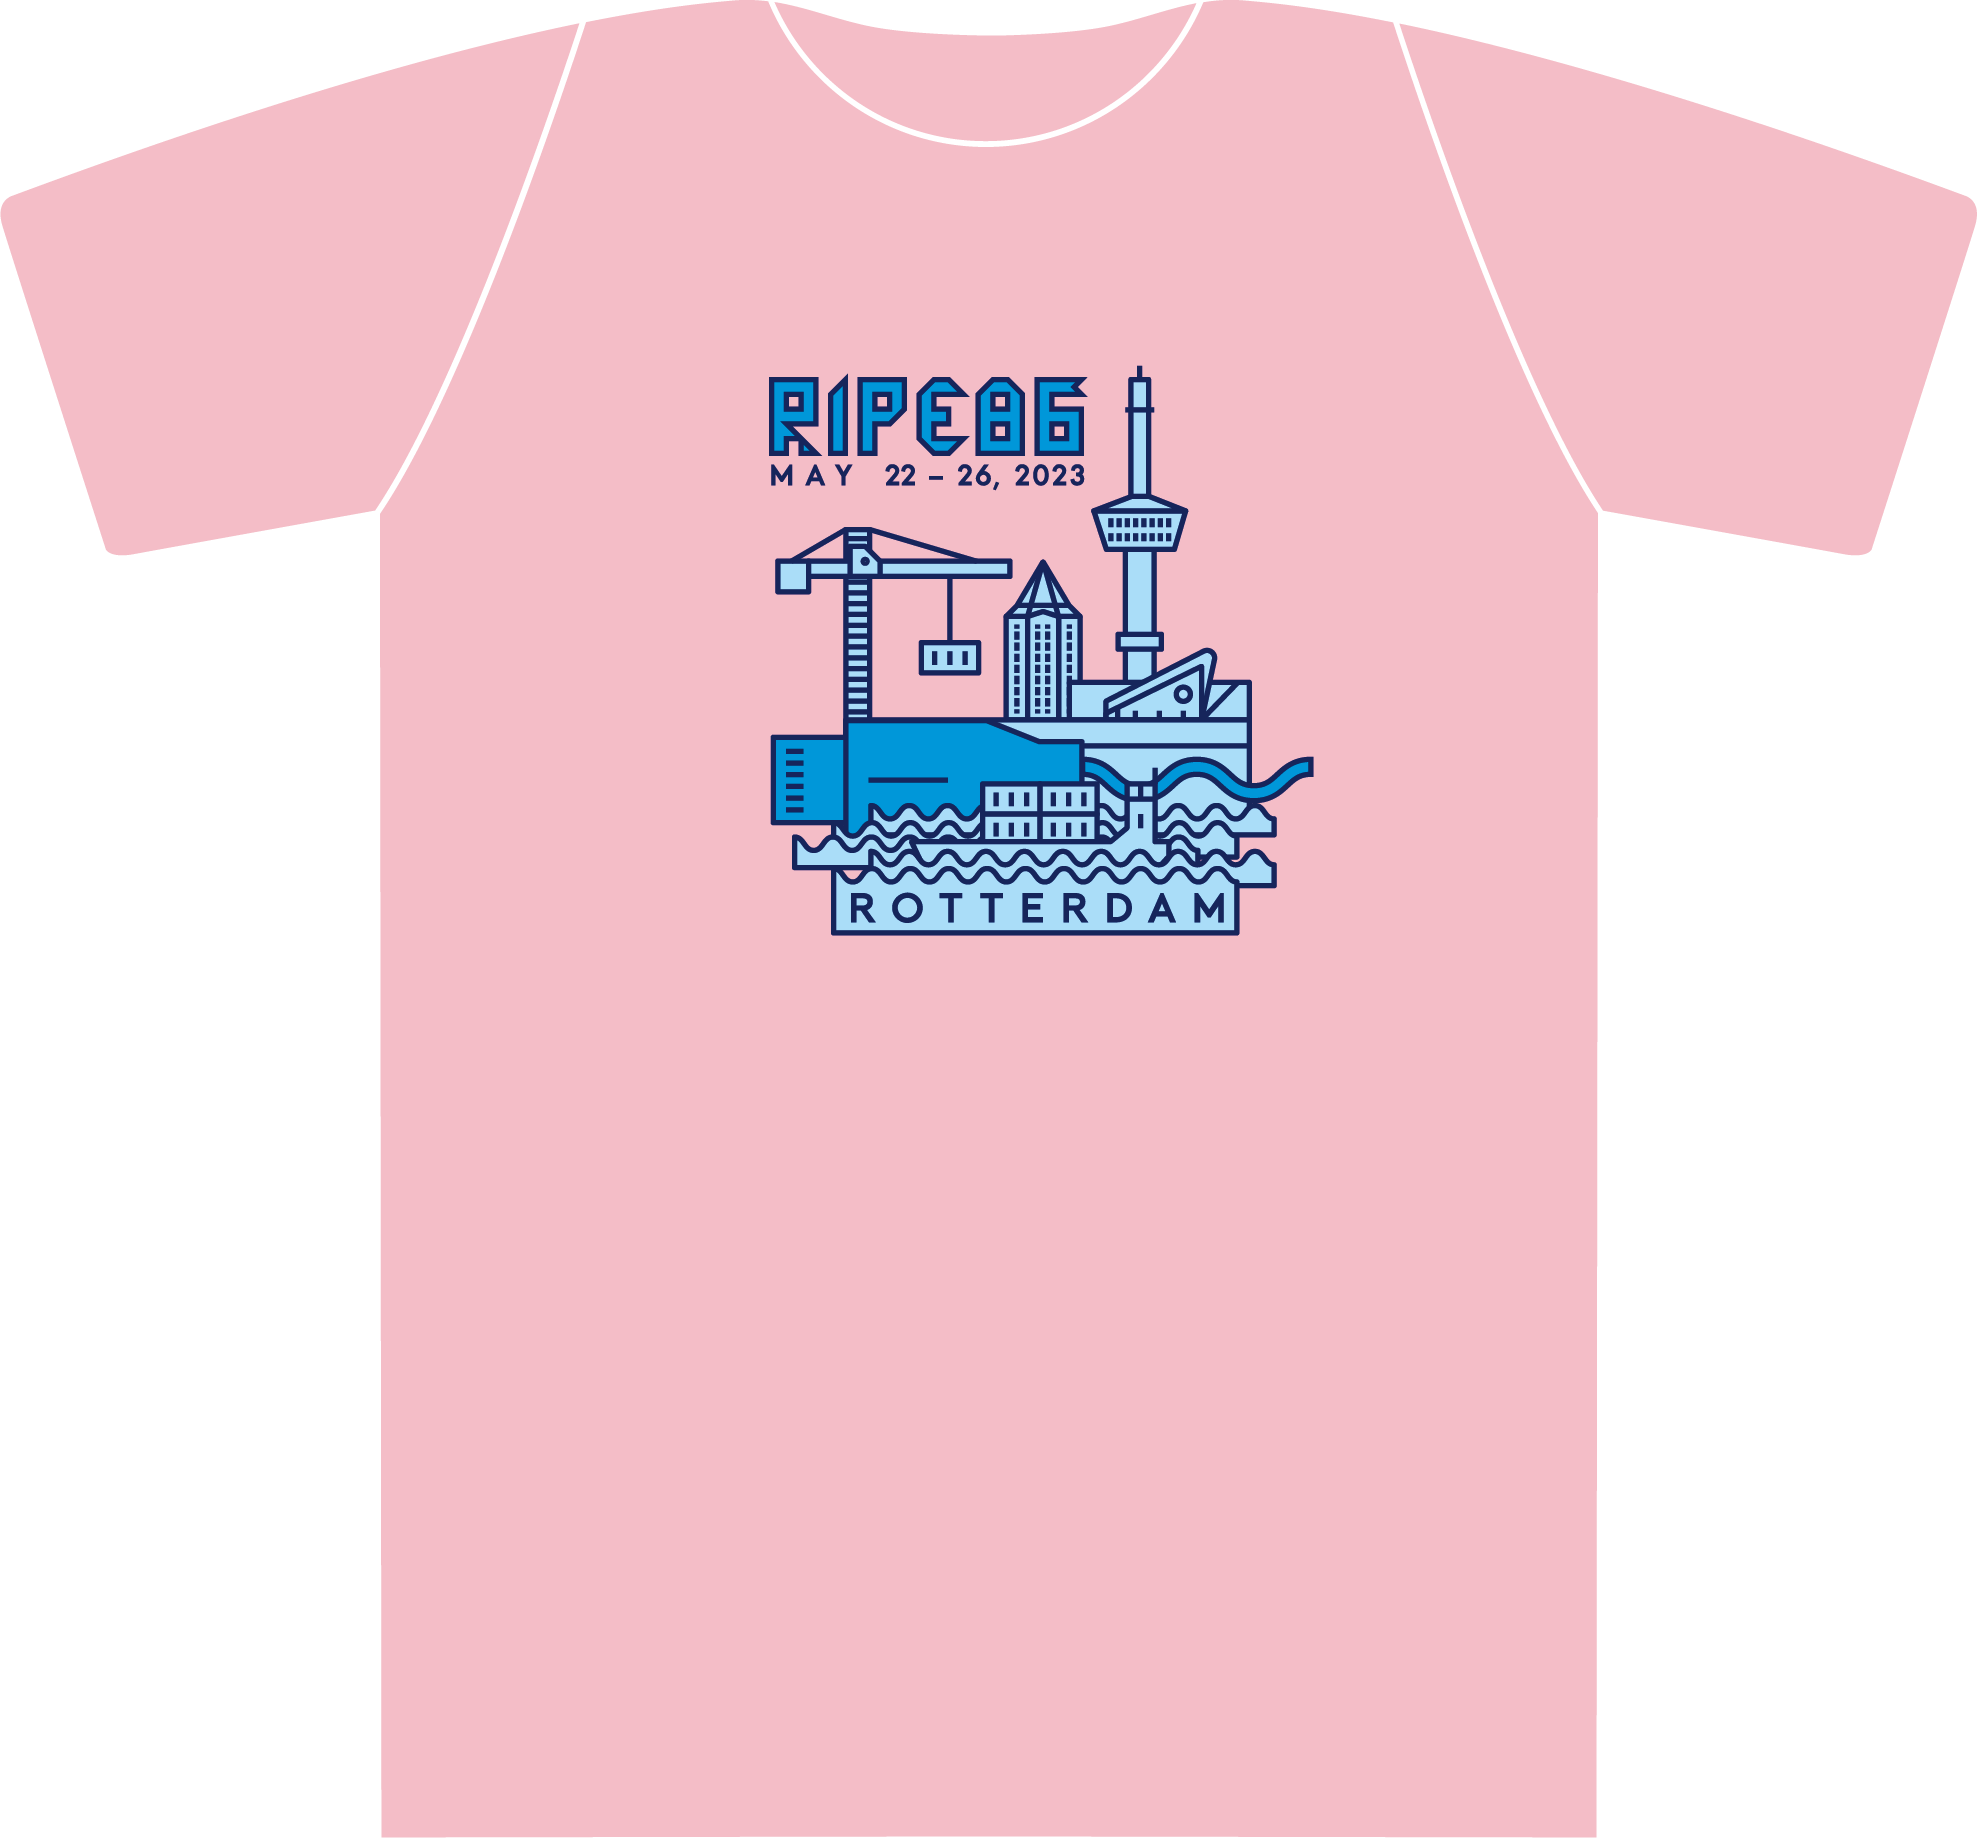 RIPE 86 t-shirt